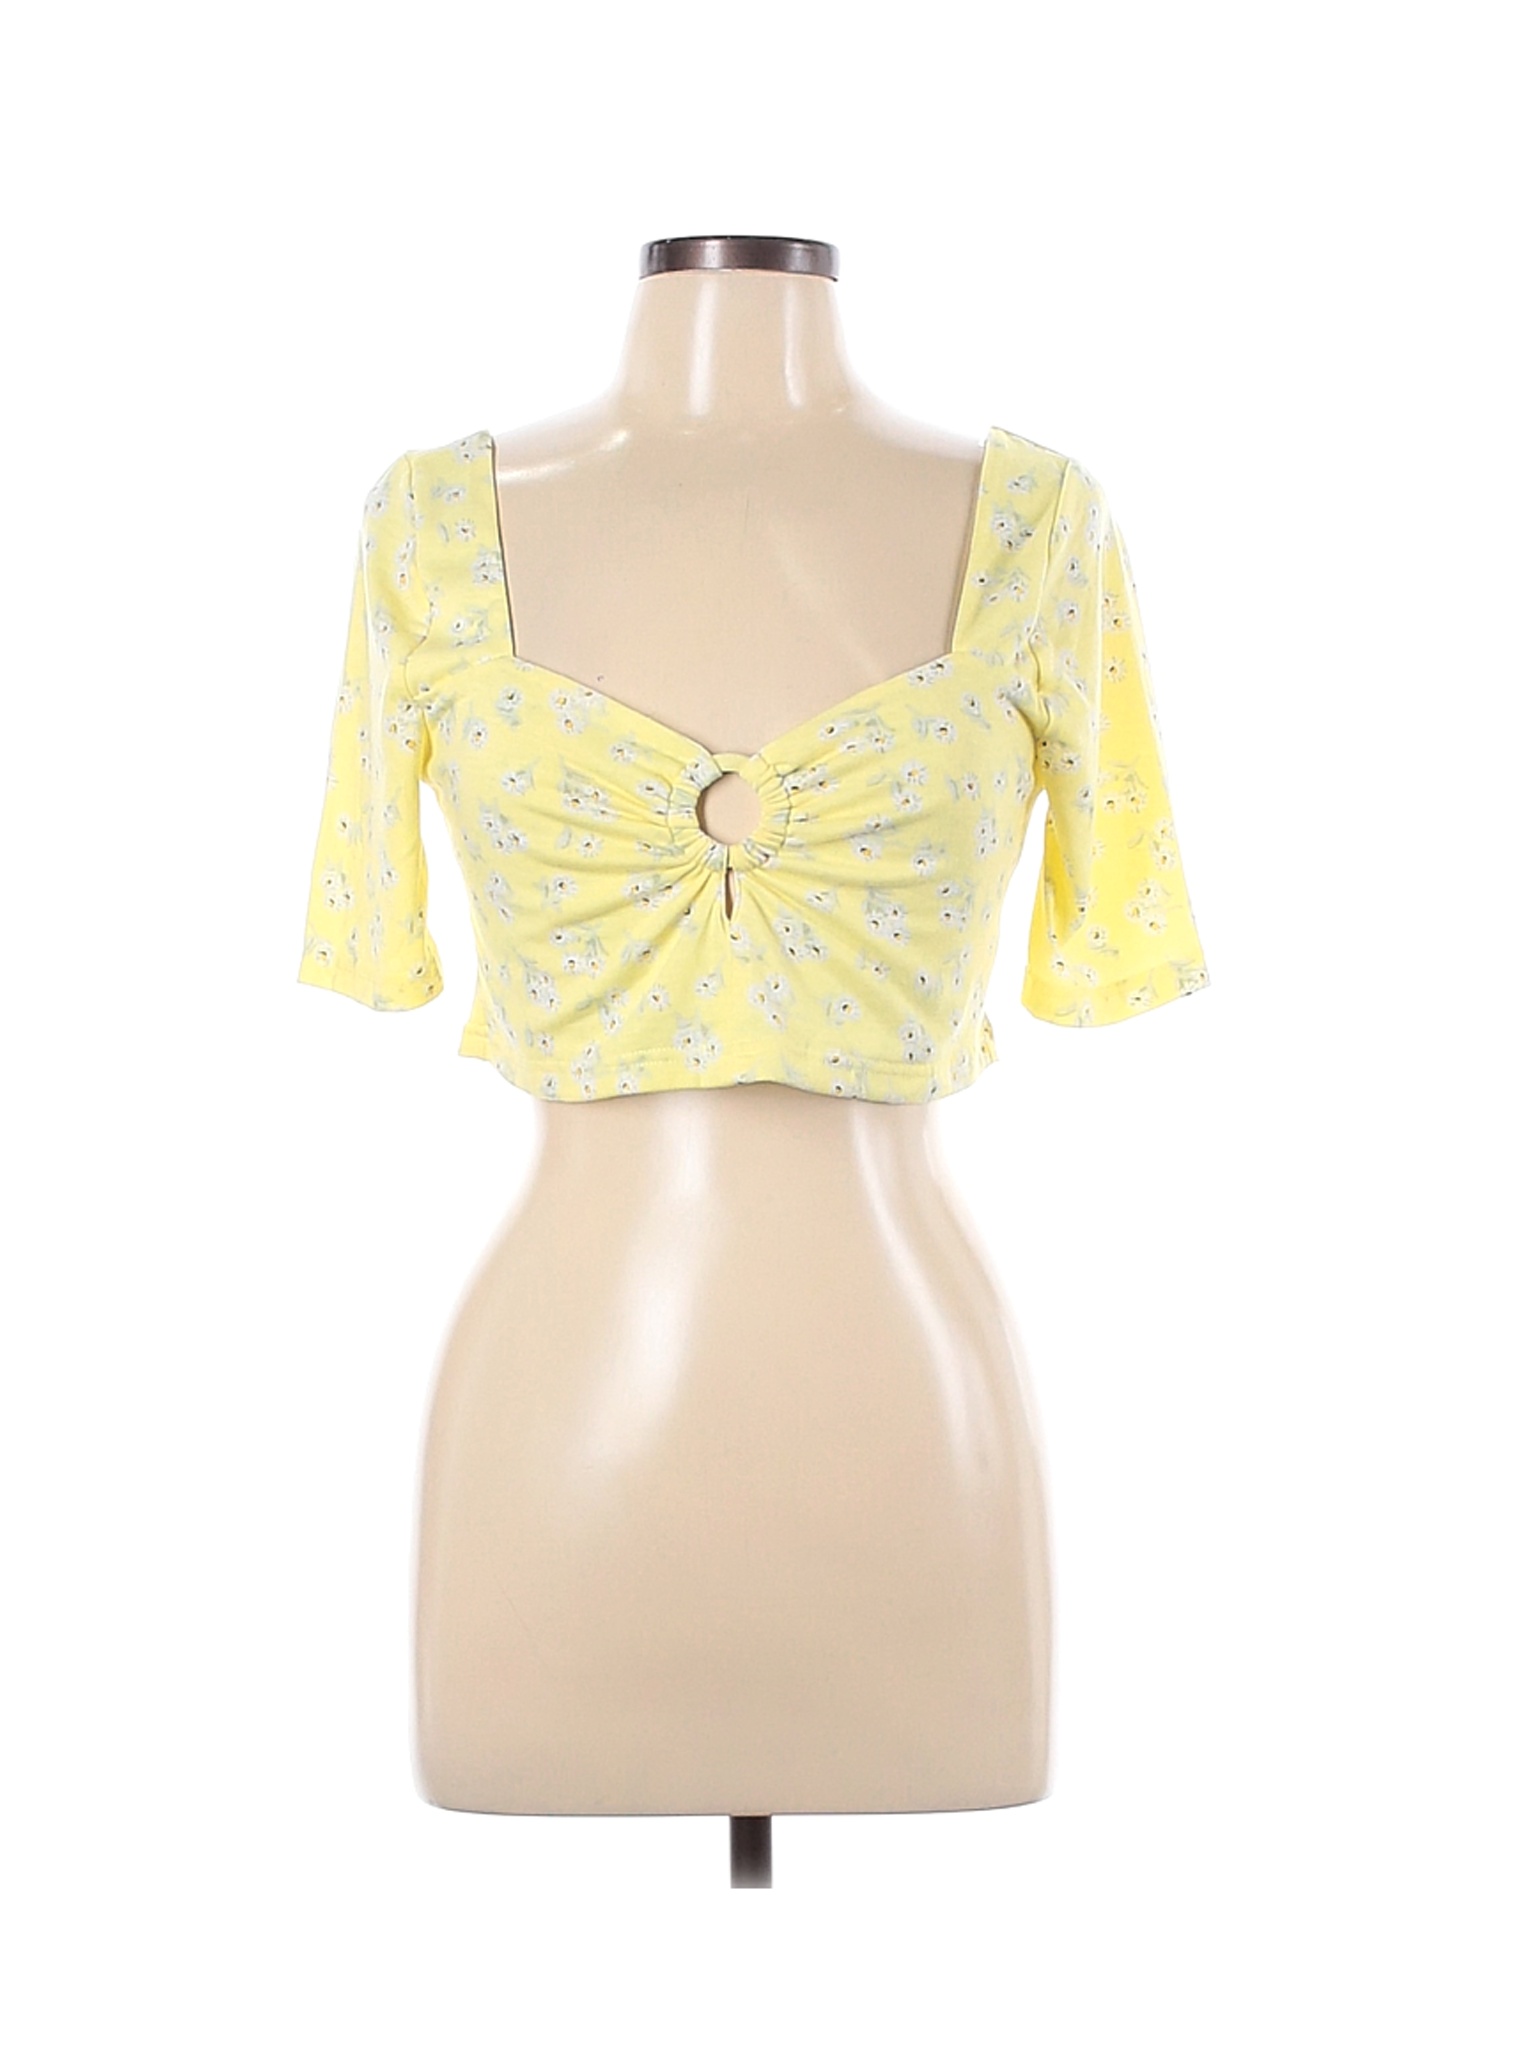 Shein Women Yellow Short Sleeve Top L | eBay